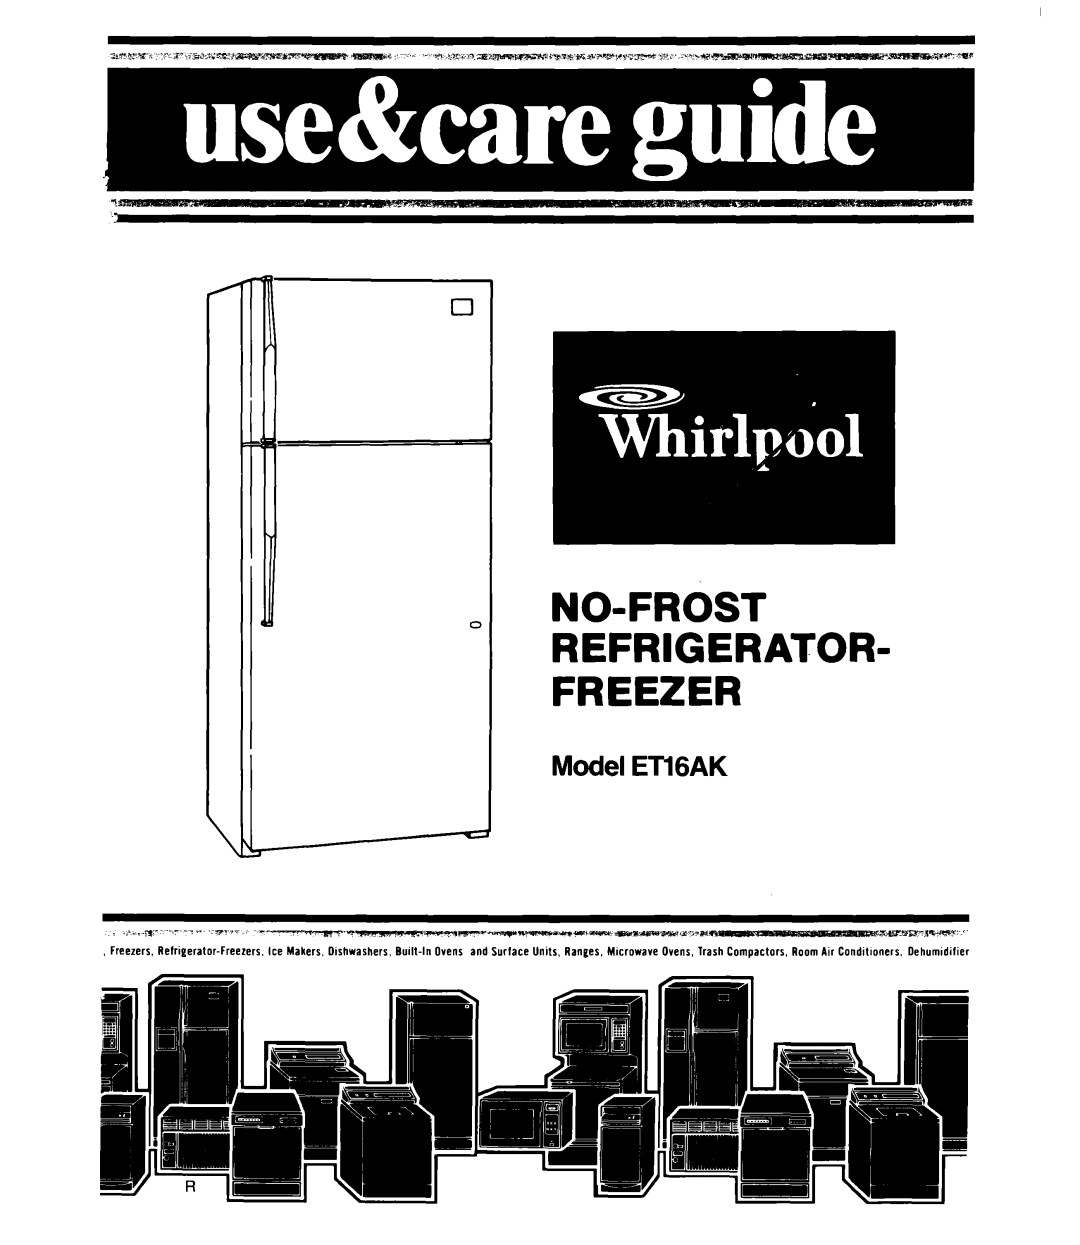 Whirlpool ET16AK manual No-Frostrefrigerator- Freezer, Model ETIGAK 